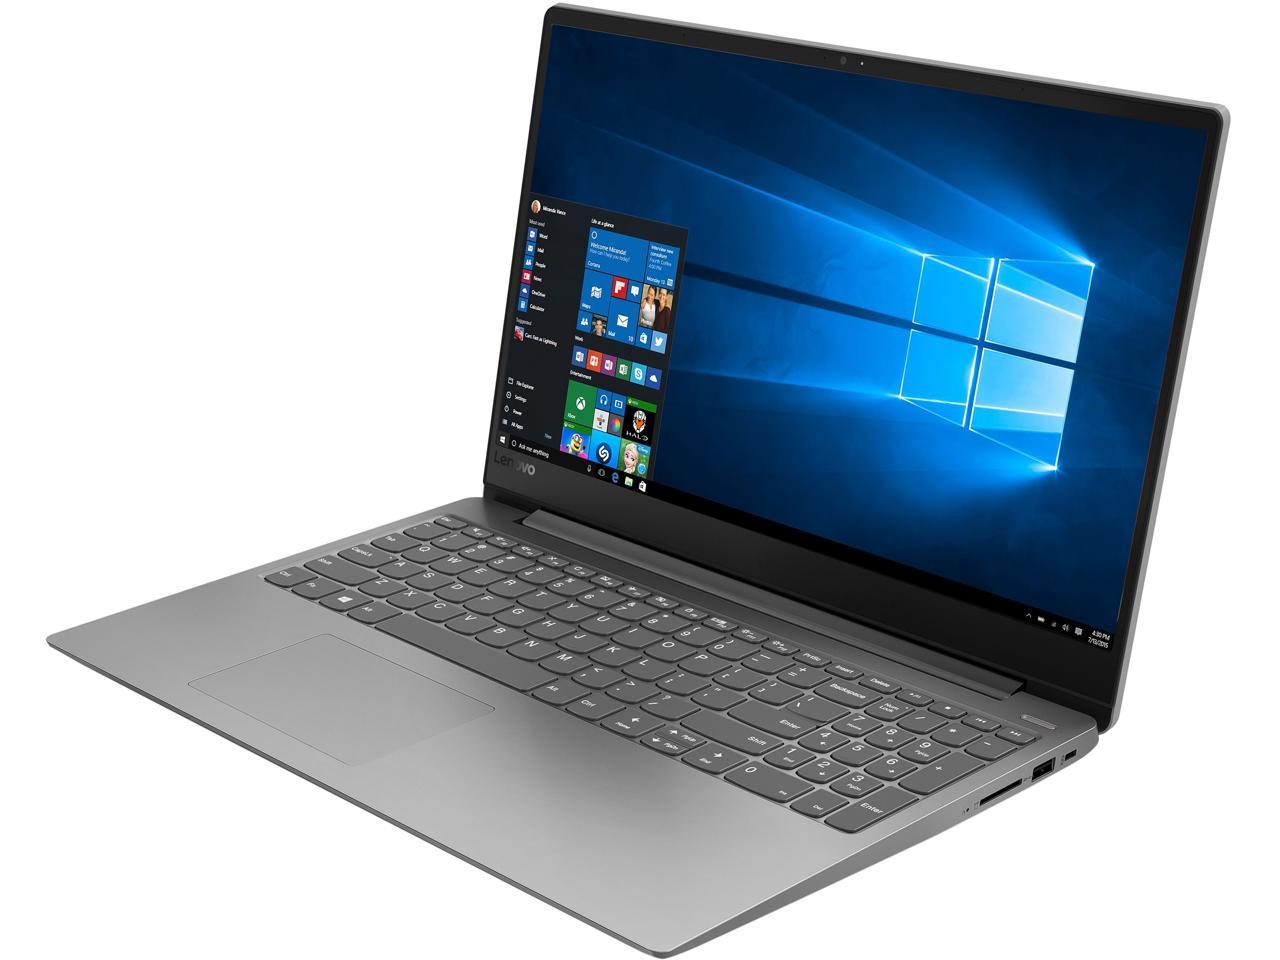 Lenovo Laptop IdeaPad 330S 81F5001RUS Intel Core i3 8th Gen 8130U (2.20 GHz) 6 GB Memory 1 TB HDD Intel UHD Graphics 620 15.6" Windows 10 Home 64-bit